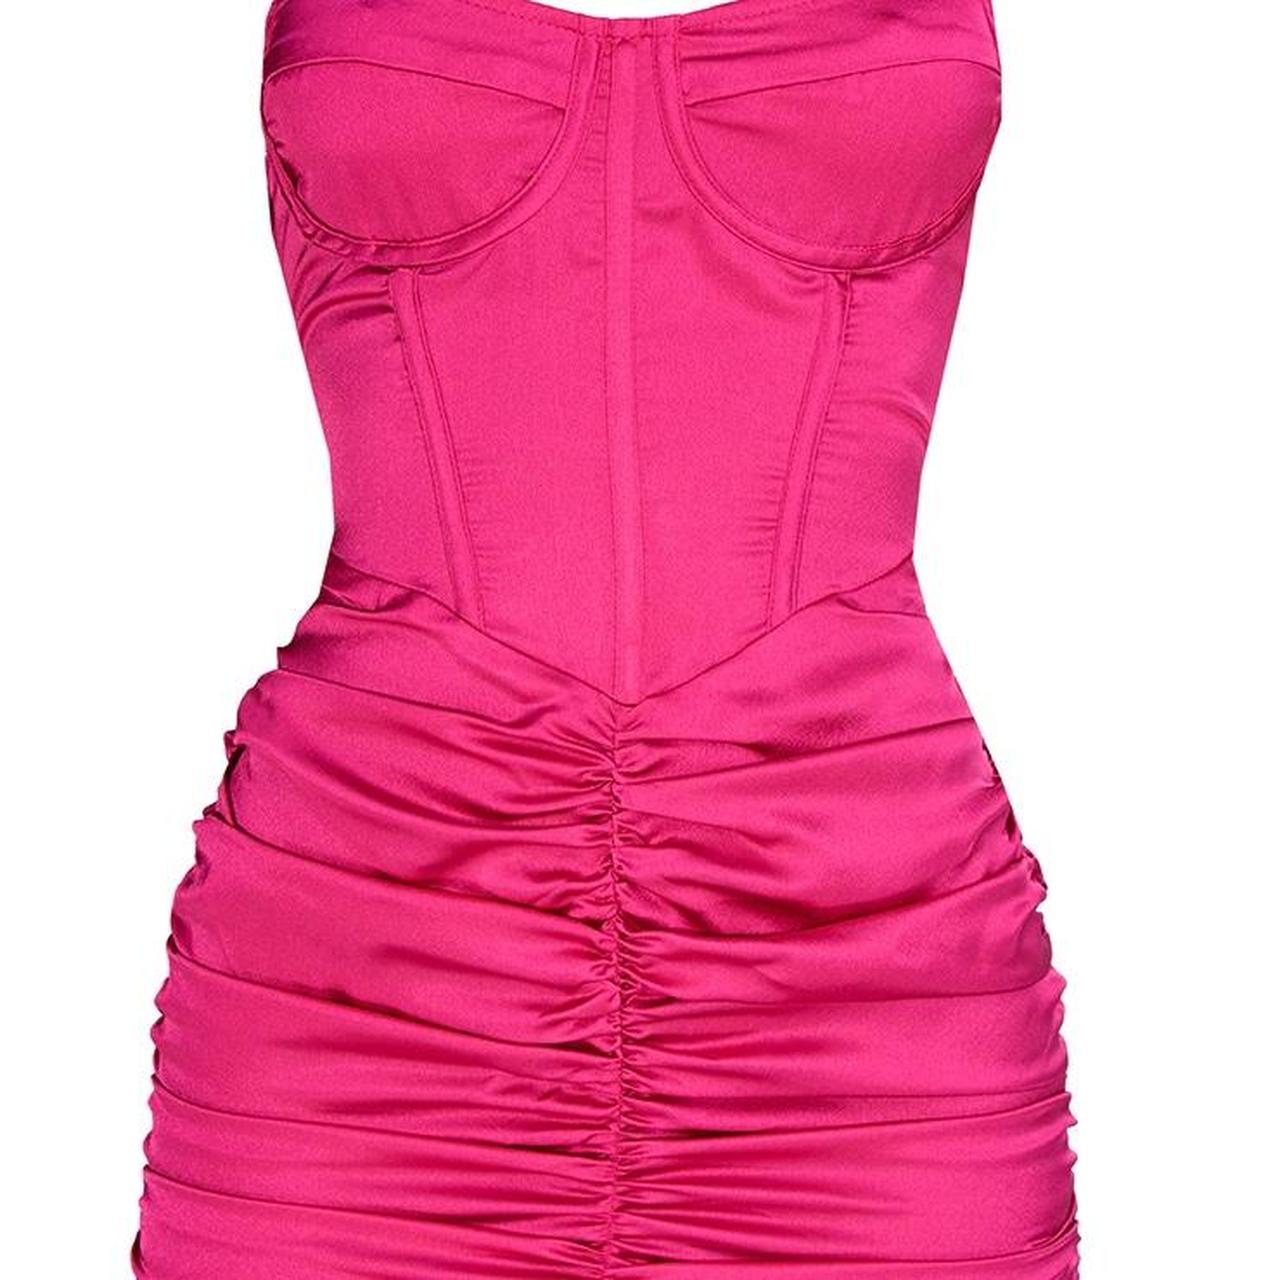 PLT strappy satin hot pink corset ruched skirt - Depop